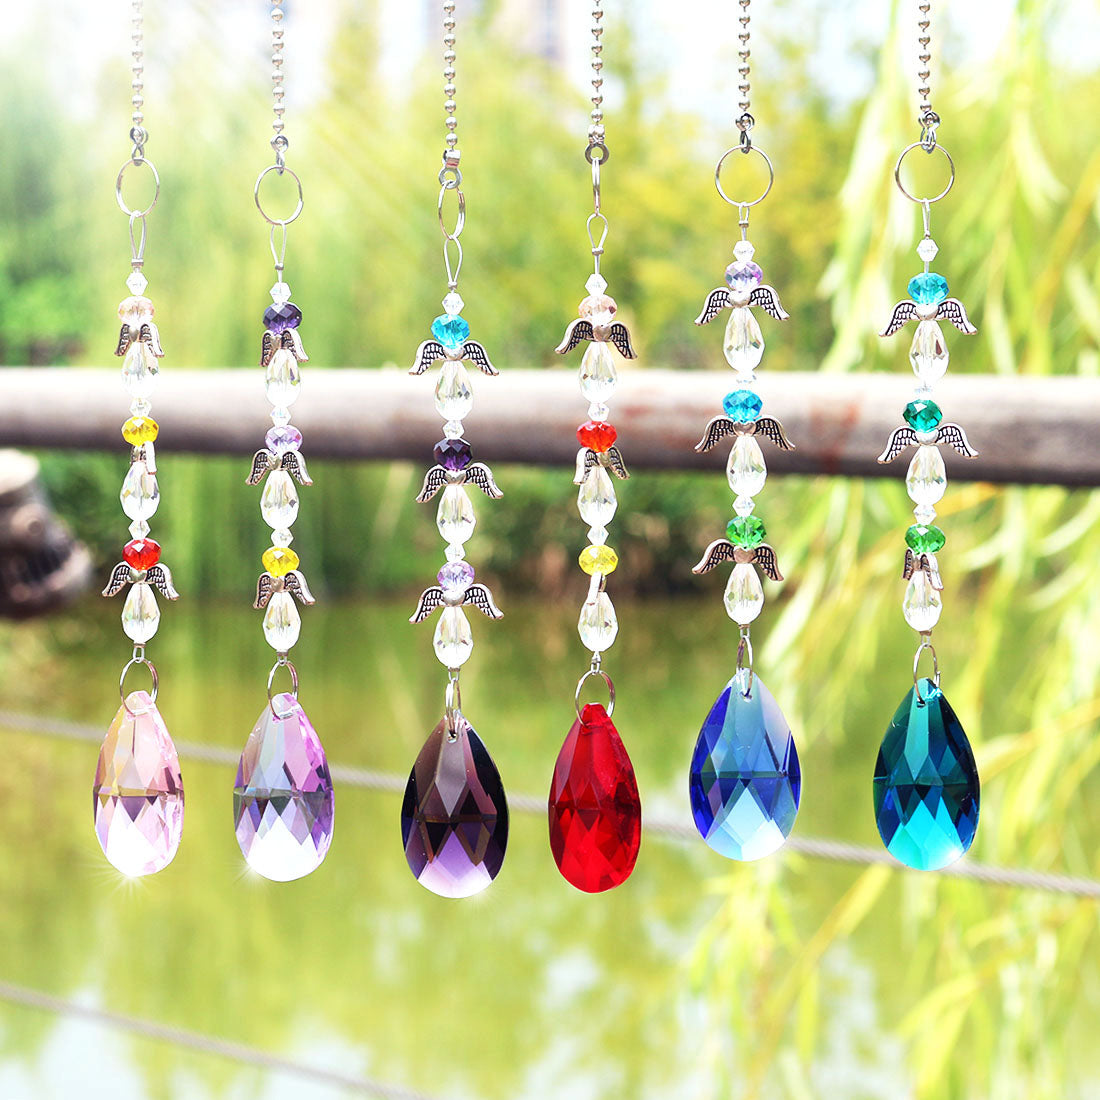 Hanging Crystal Suncatcher Angel Pendant Faceted Grid Prism Decor Rainbow Ornament